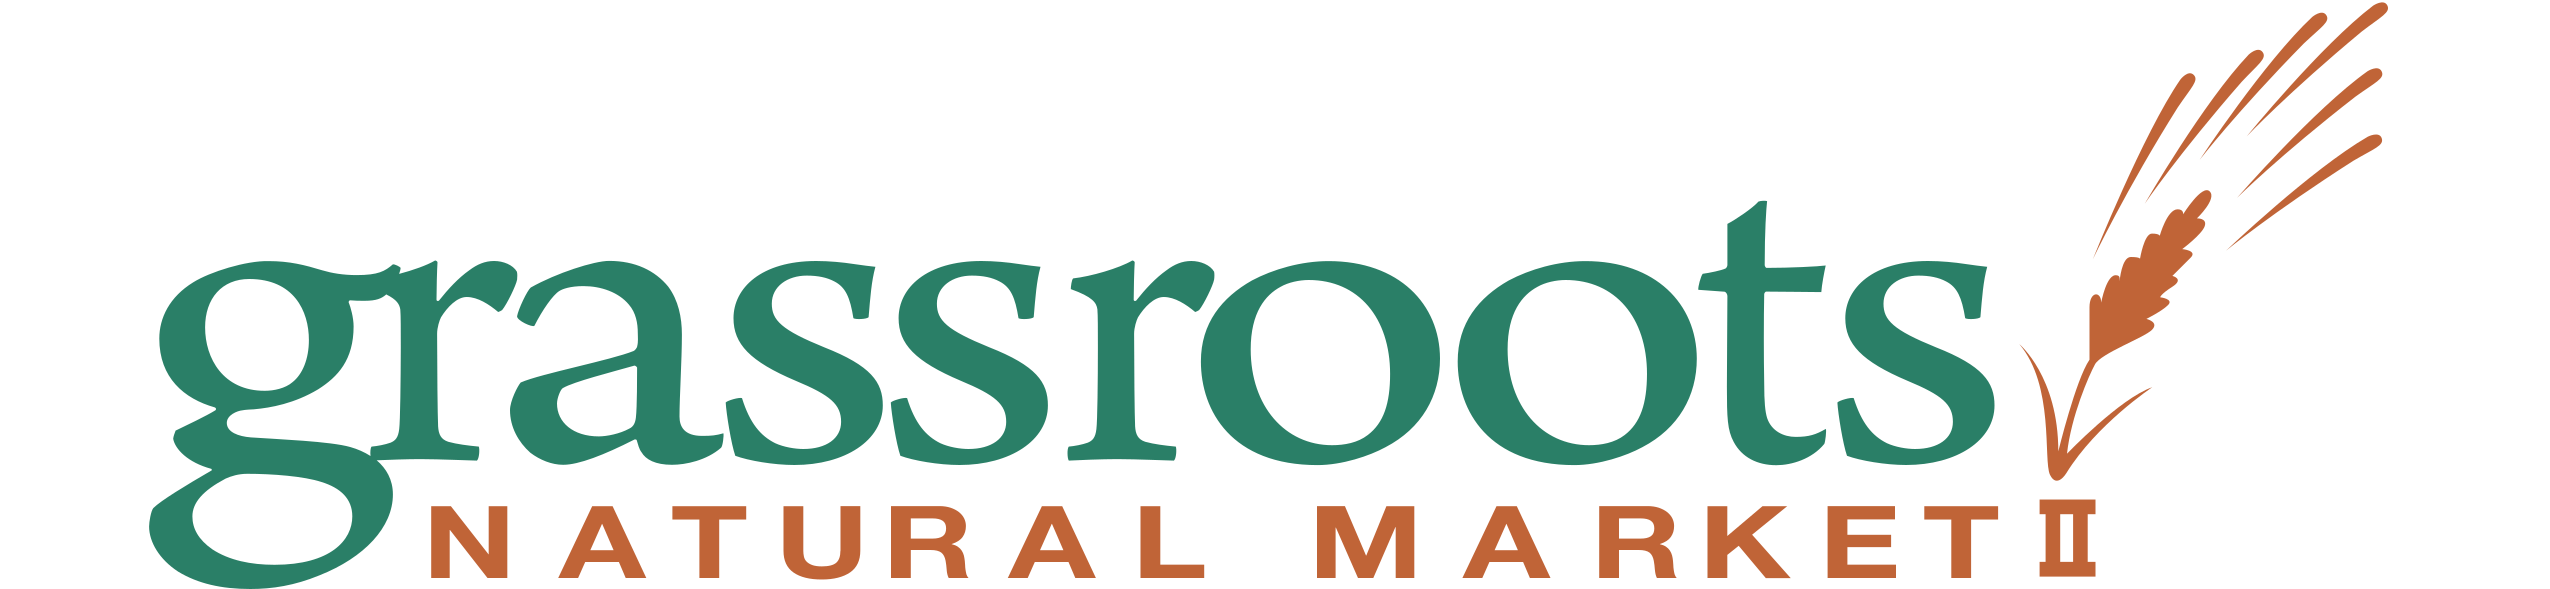 grassroots natural market